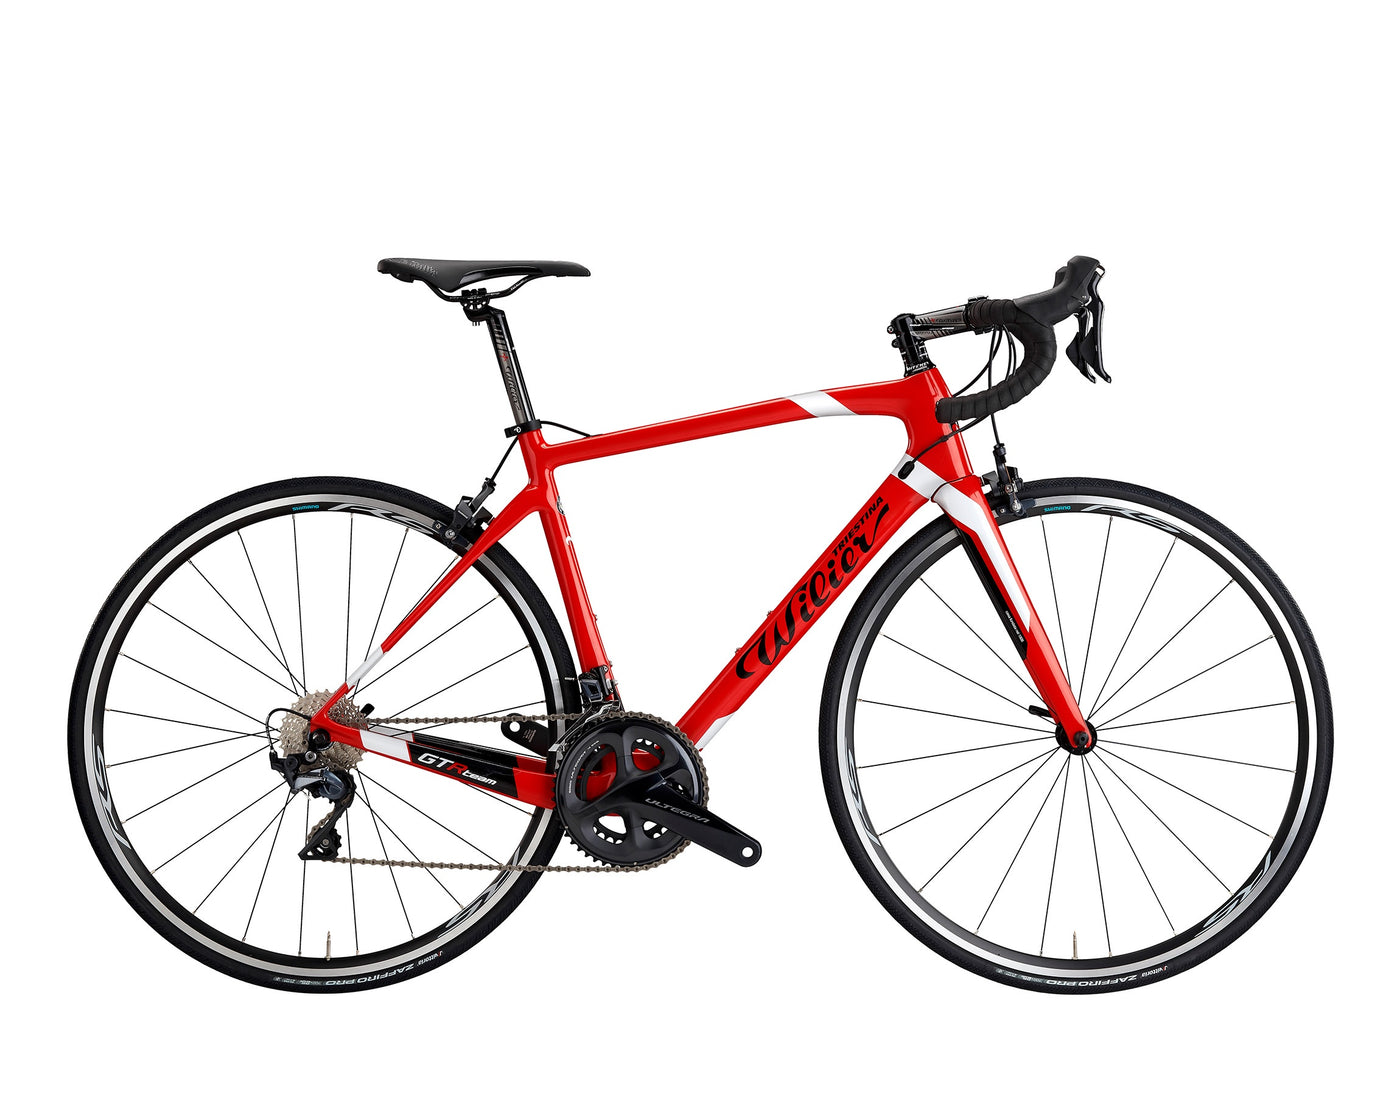 Bicicleta Wilier Gtr Team Durace Rs100 (Red/White) 2019